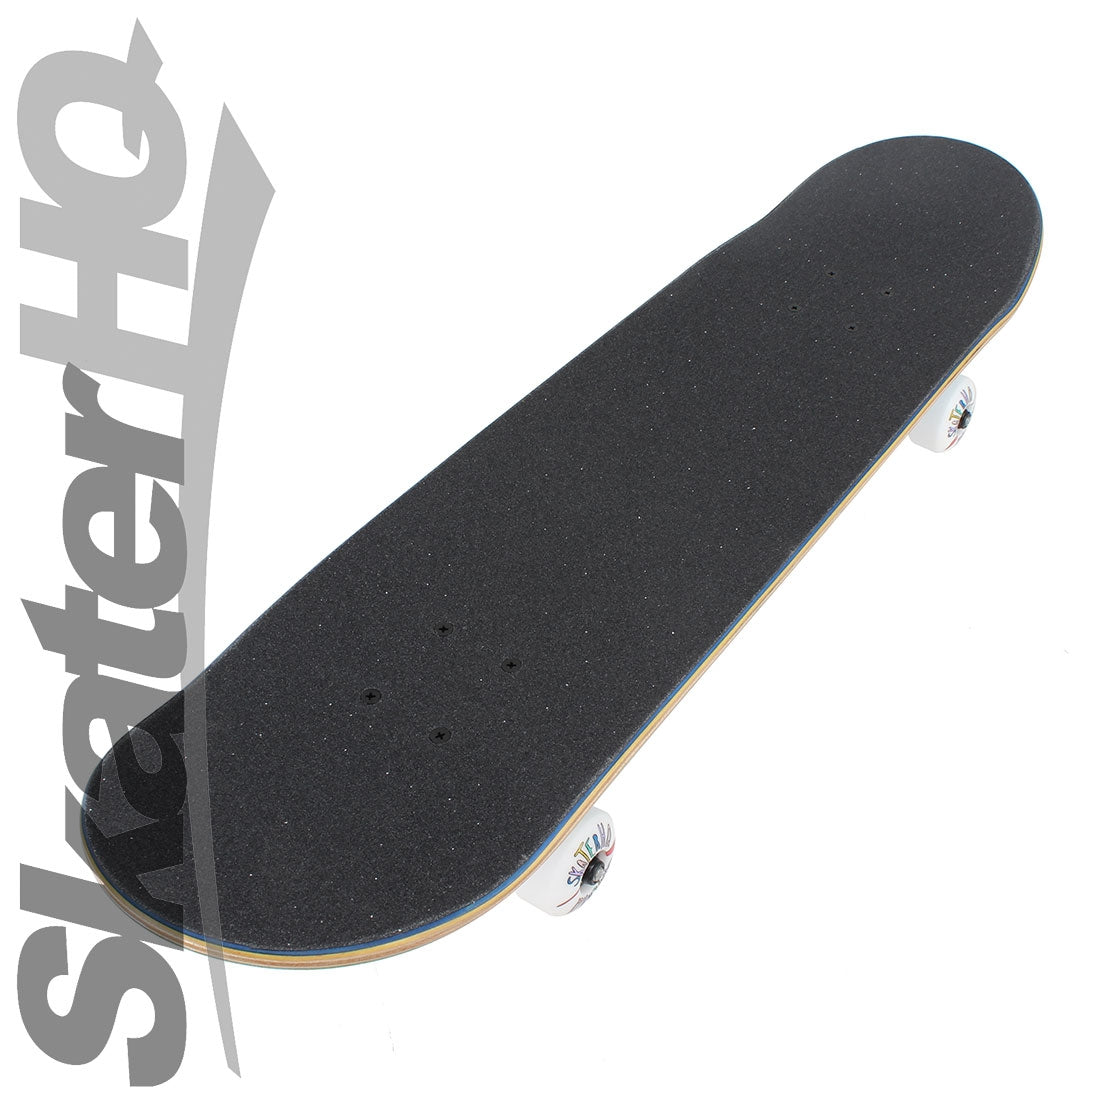 Skater HQ Platypus 7.9 S Complete Skateboard Completes Modern Street